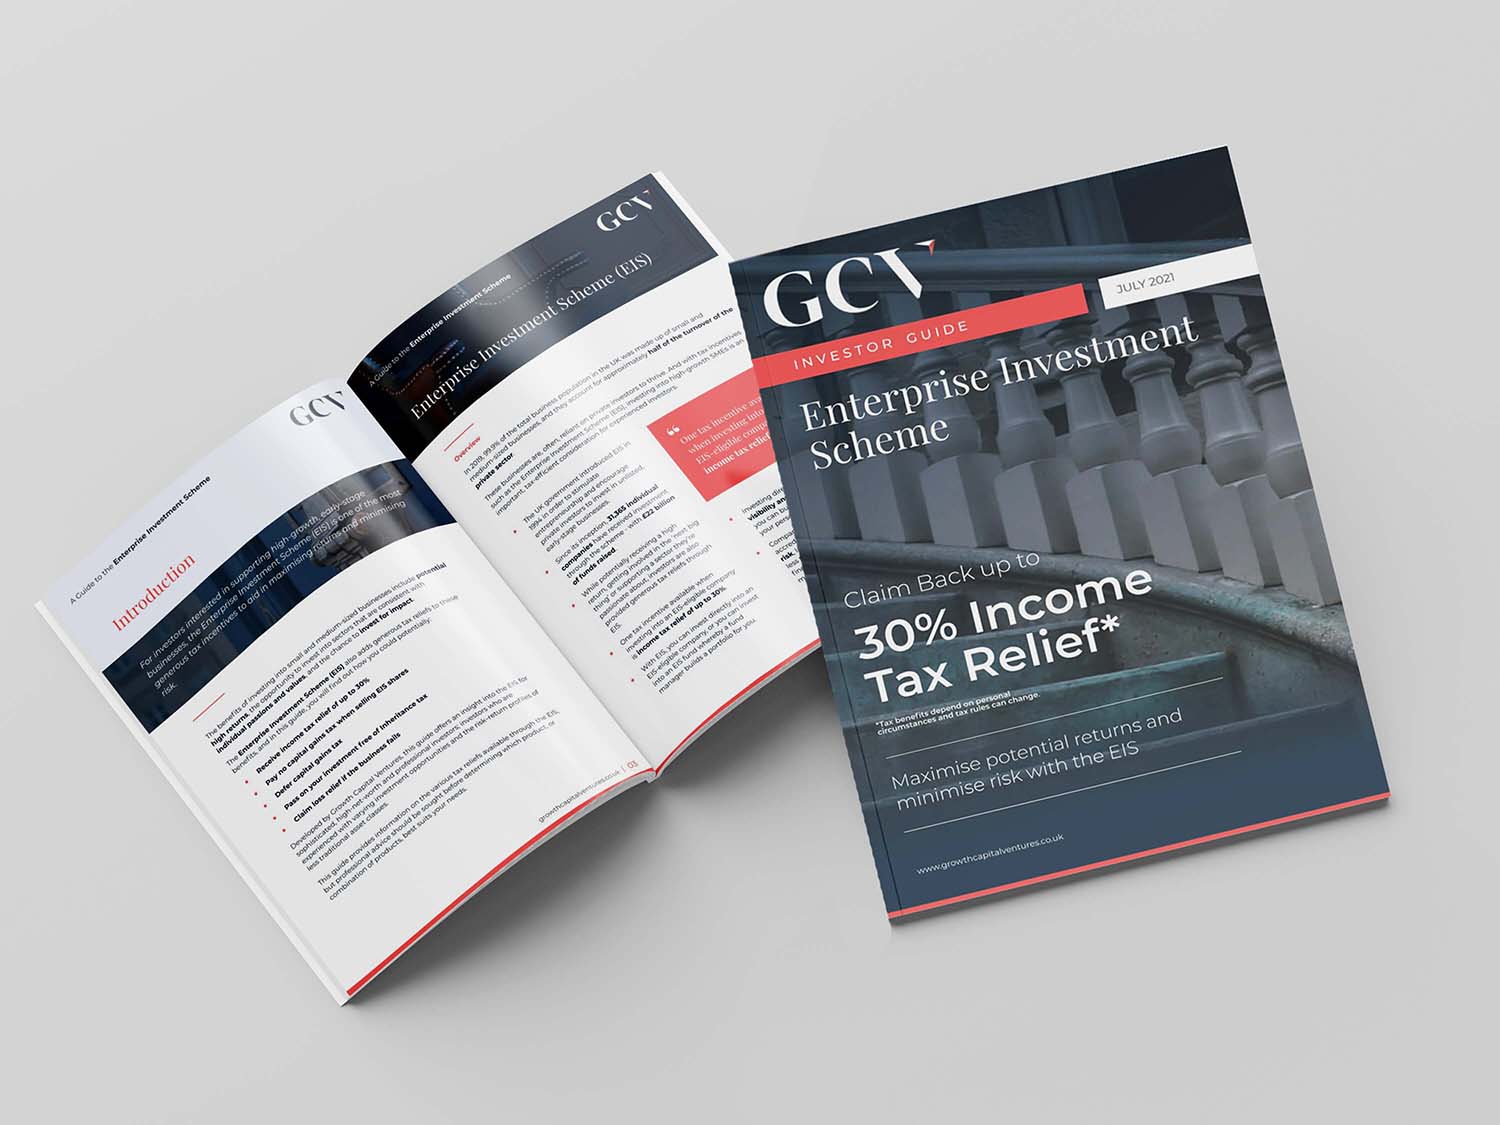 eis-tax-reliefs-explained-gcv